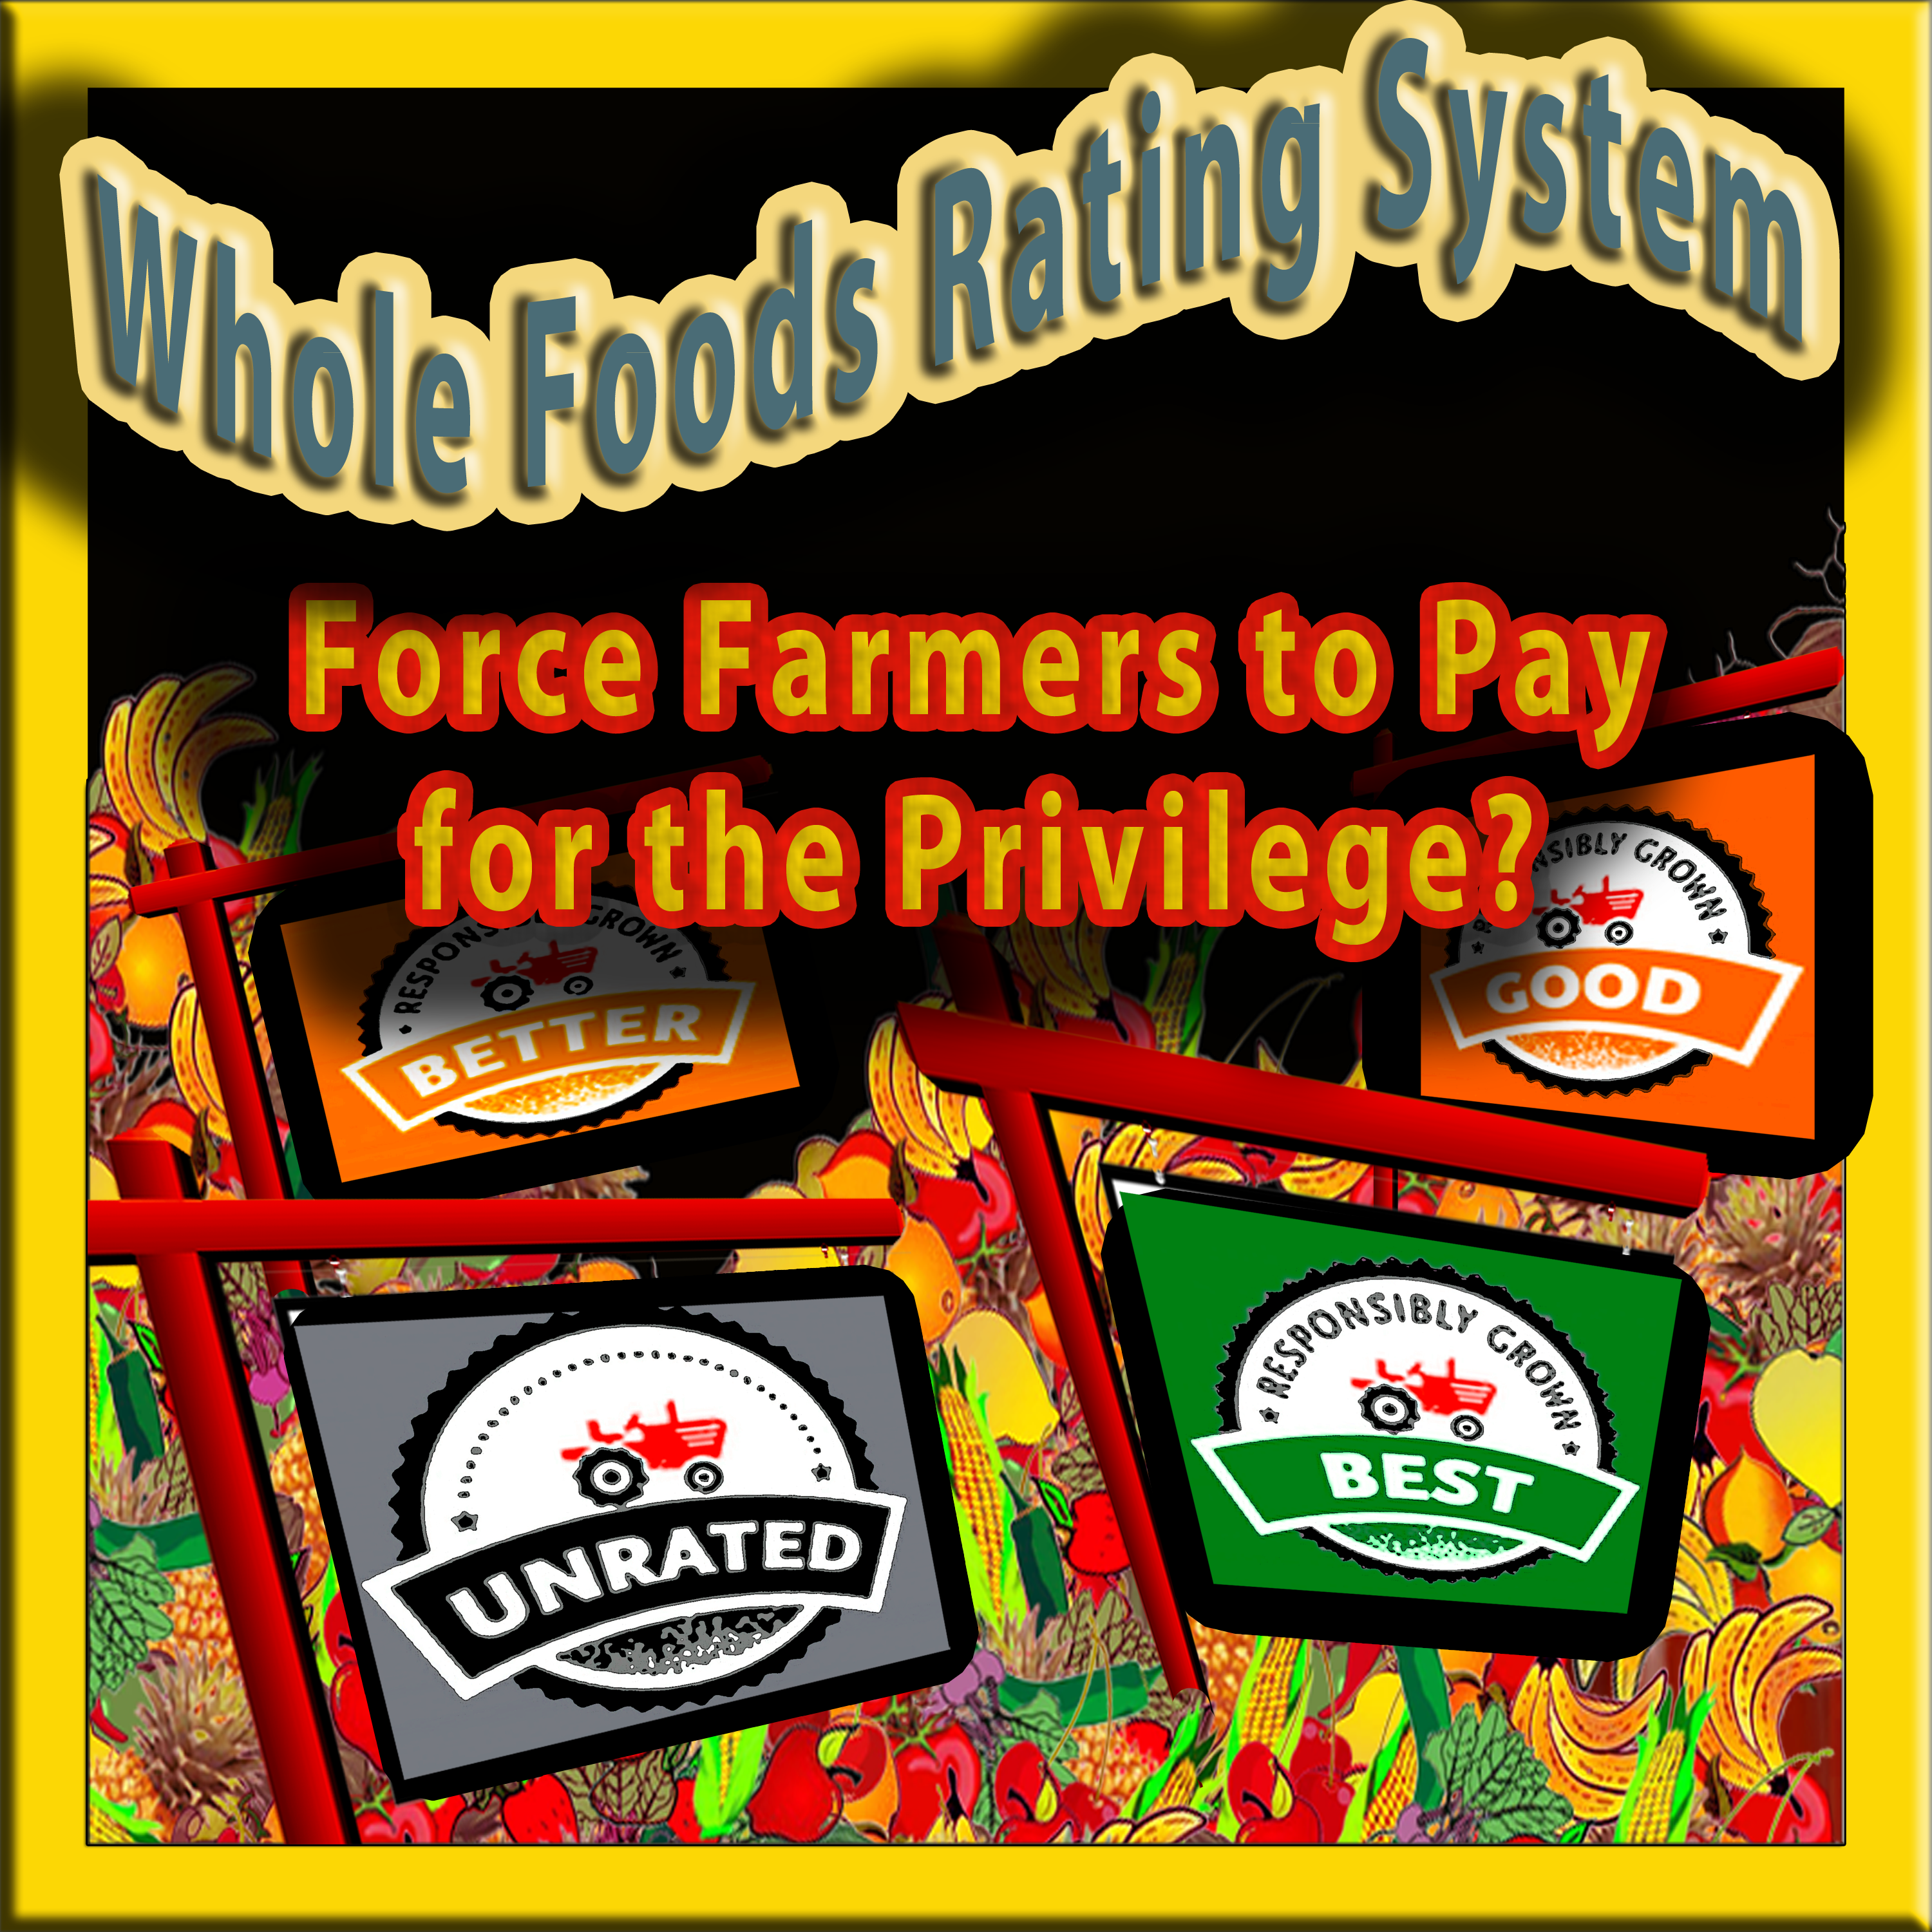 Michael Olson Food Chain Radio – Whole Foods Grading System